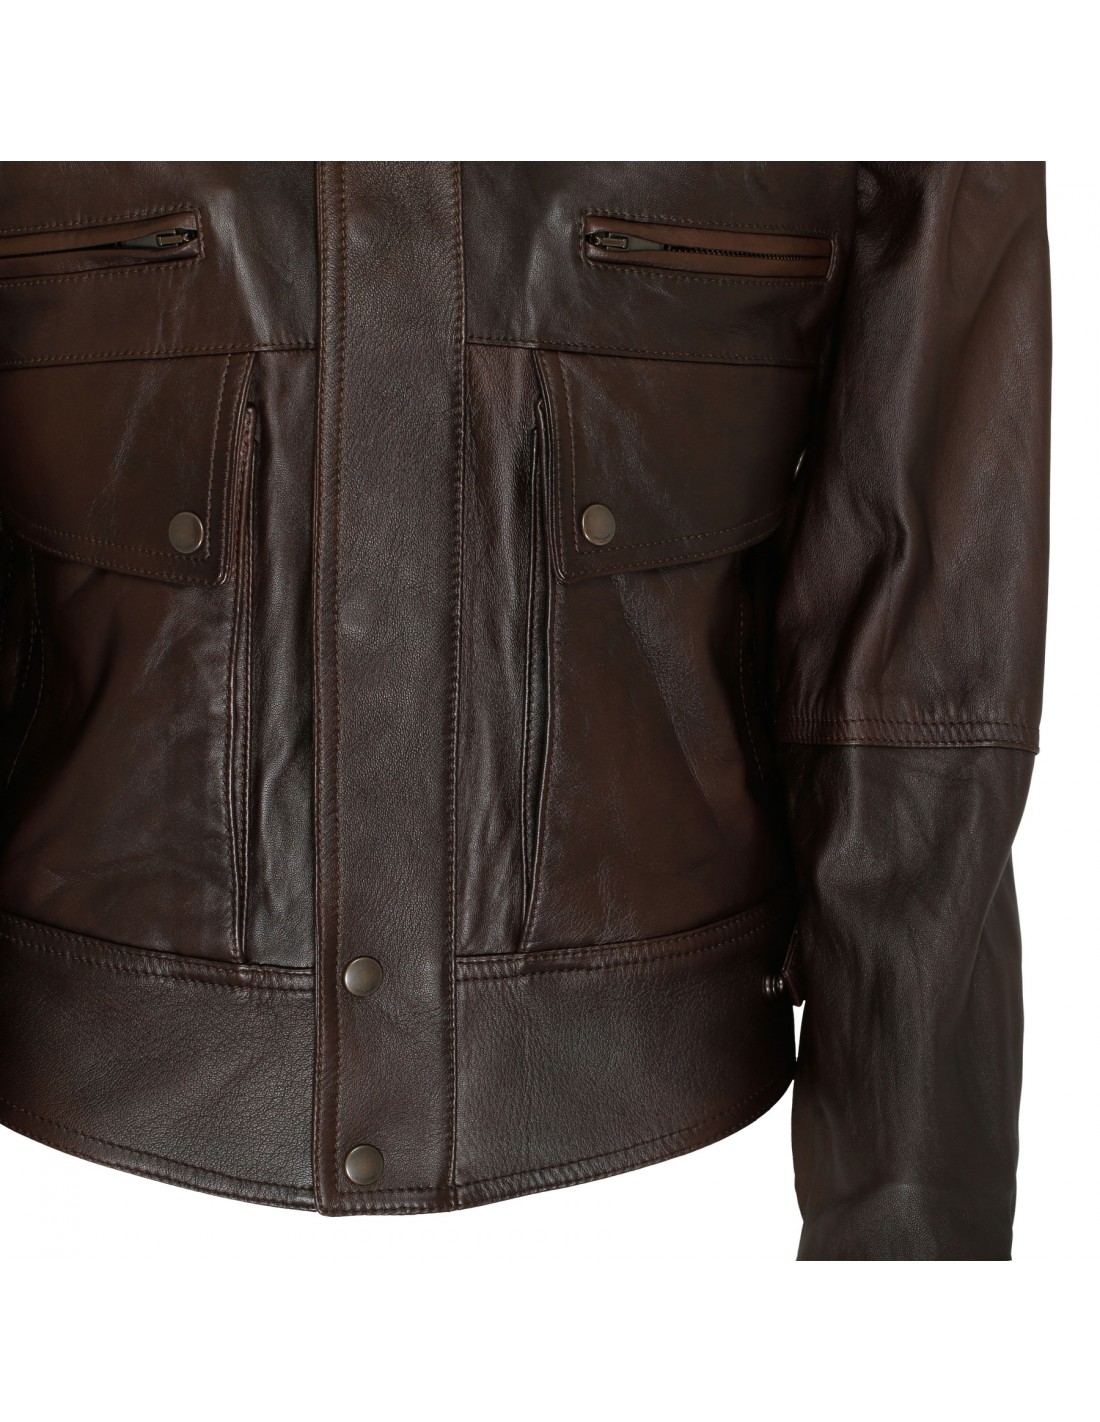 Crinkled leather jacket